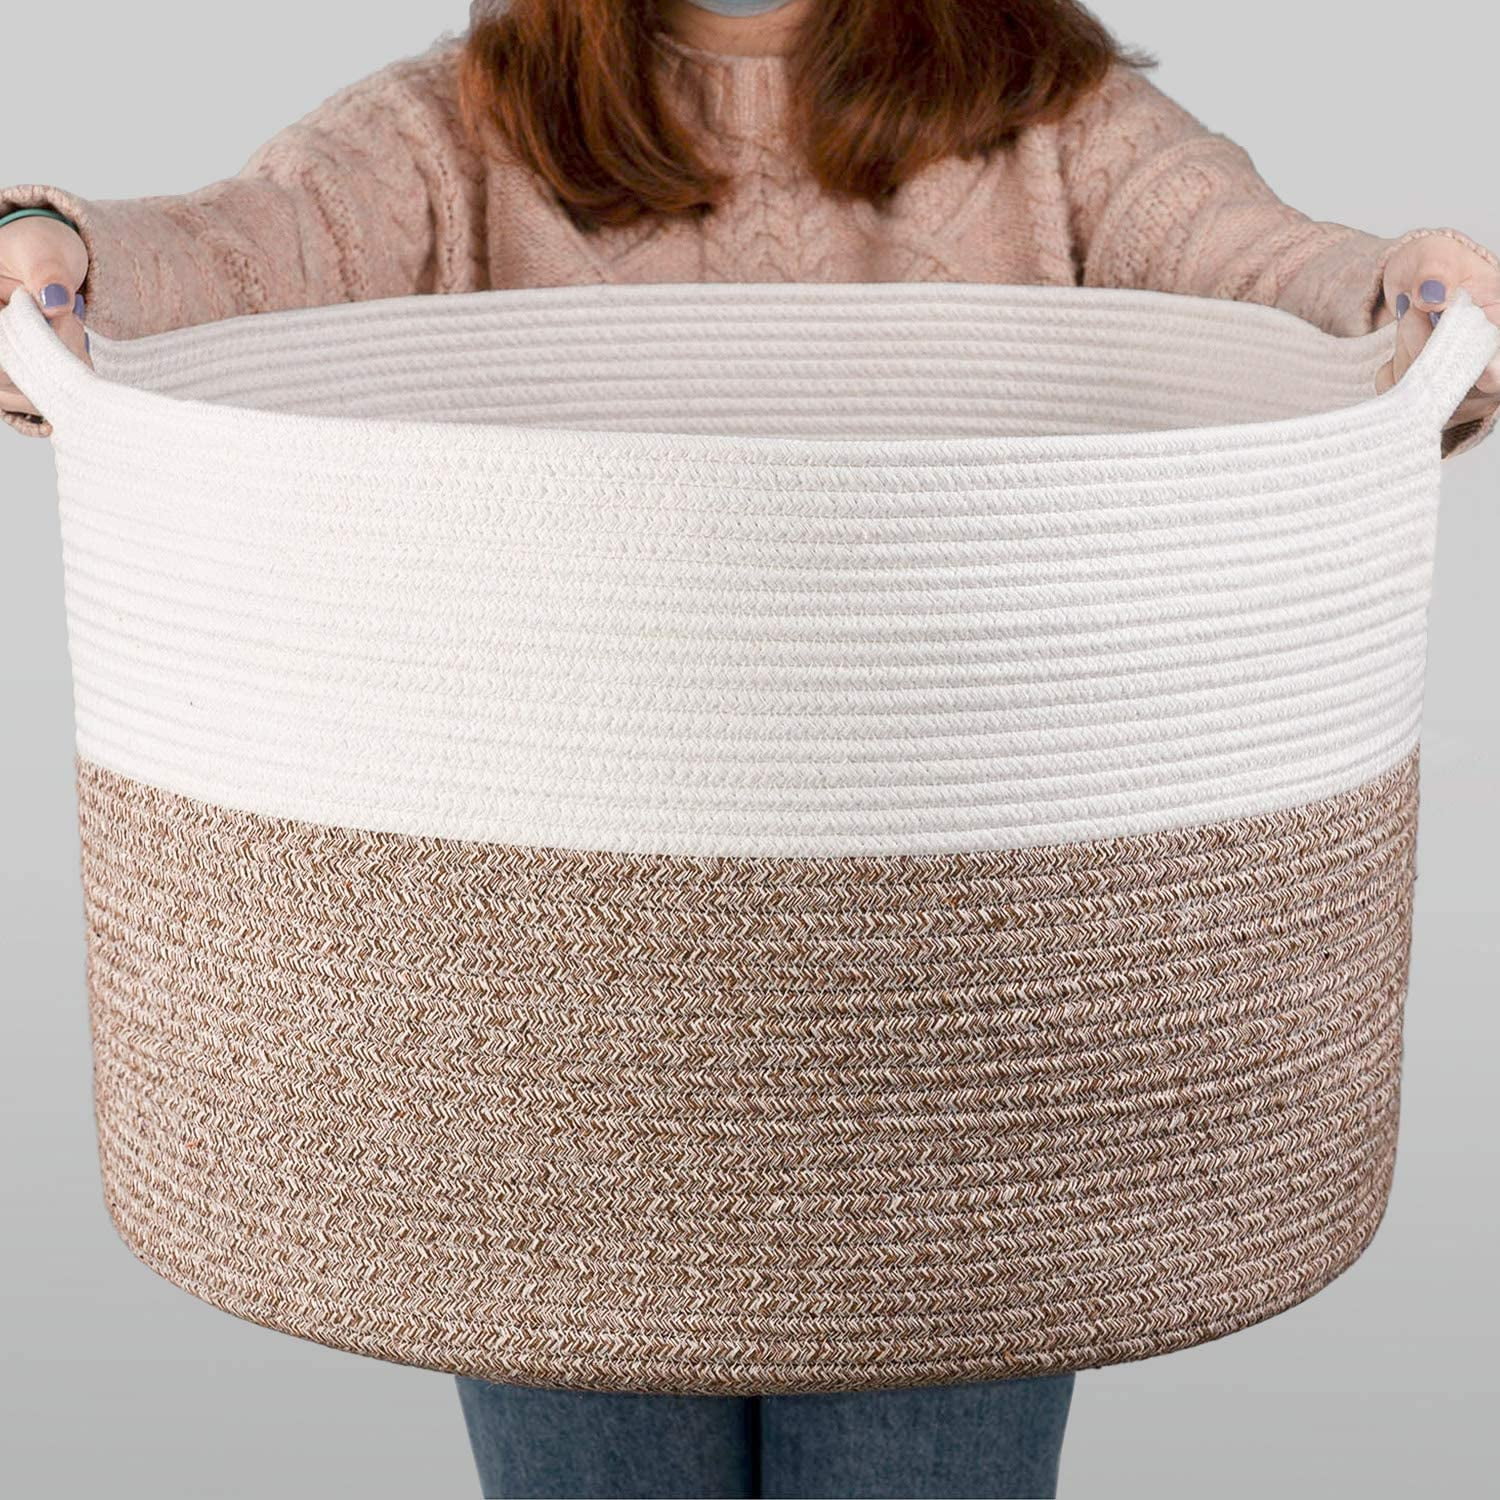 Toy Bin XXL Cotton Rope Storage Basket Woven Laundry Hamper Baskets Blanket 